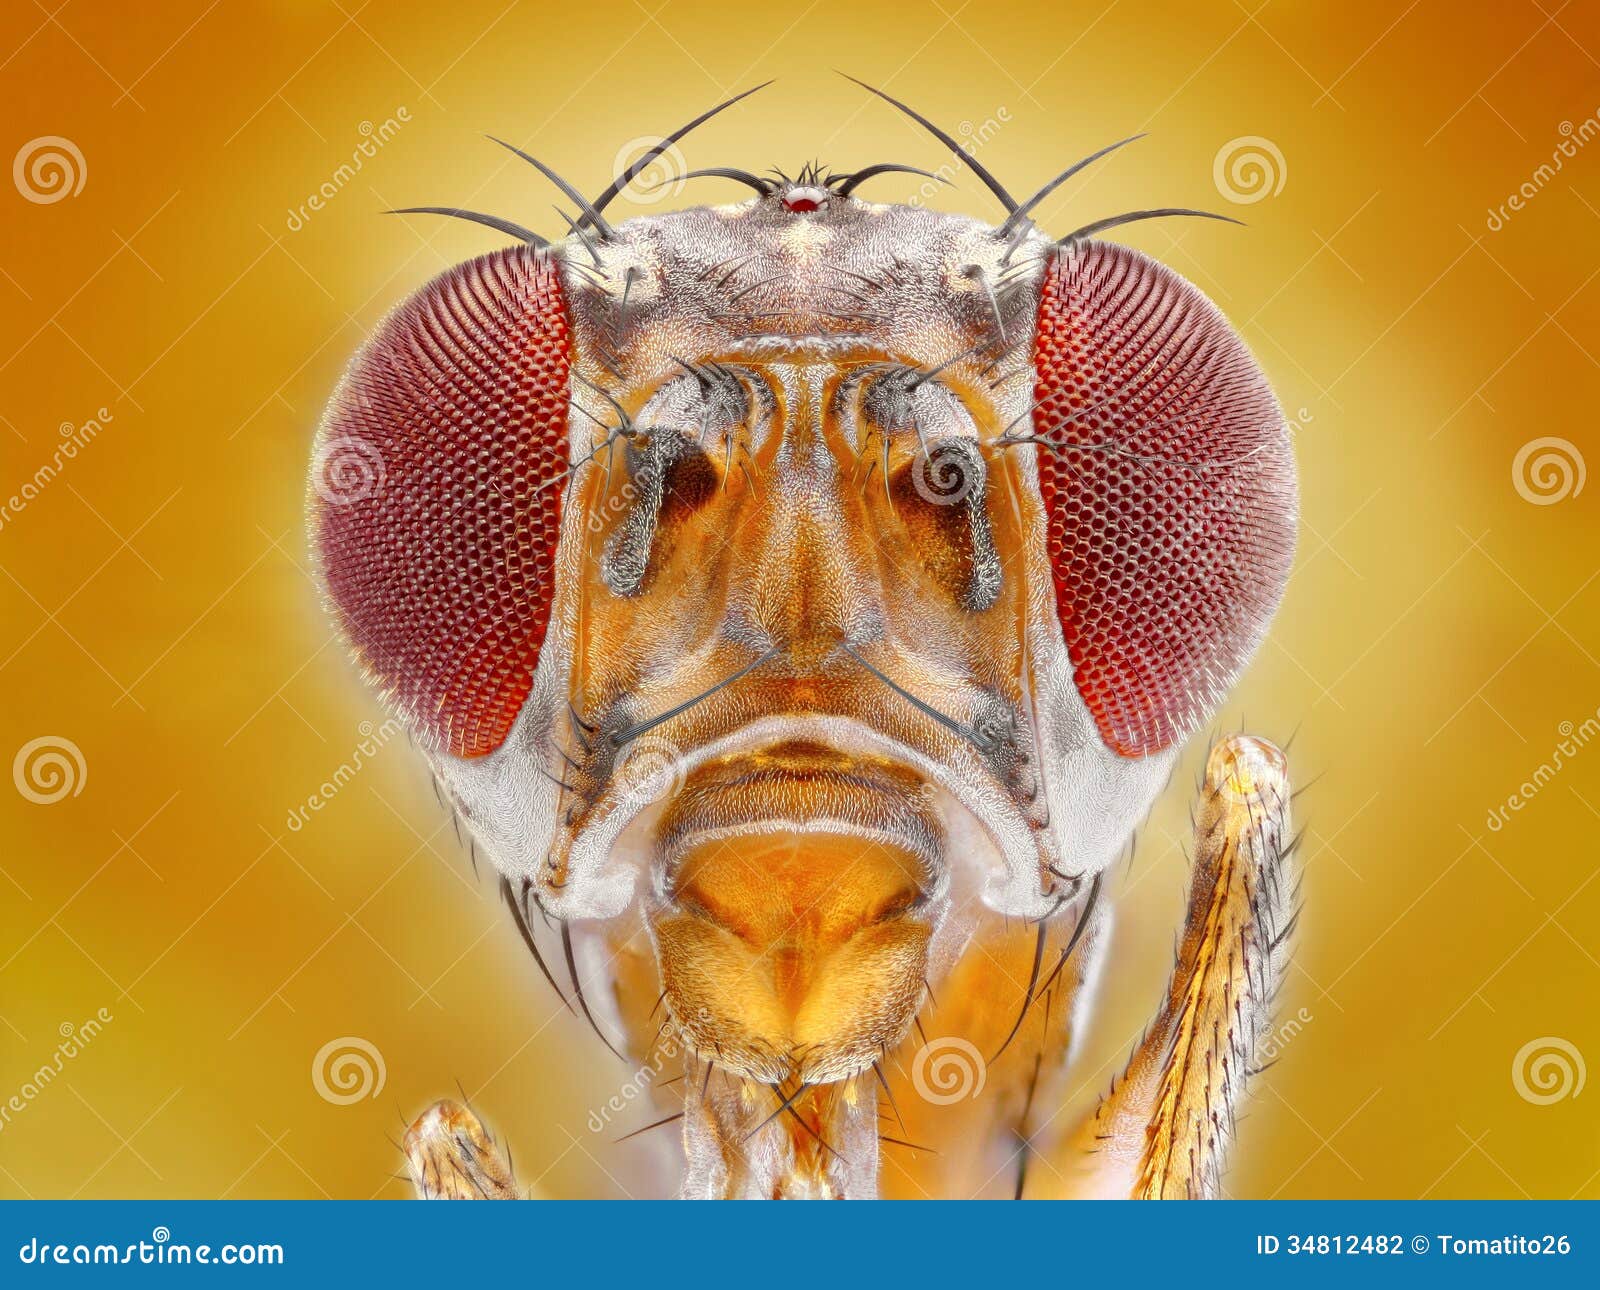 fruit fly head